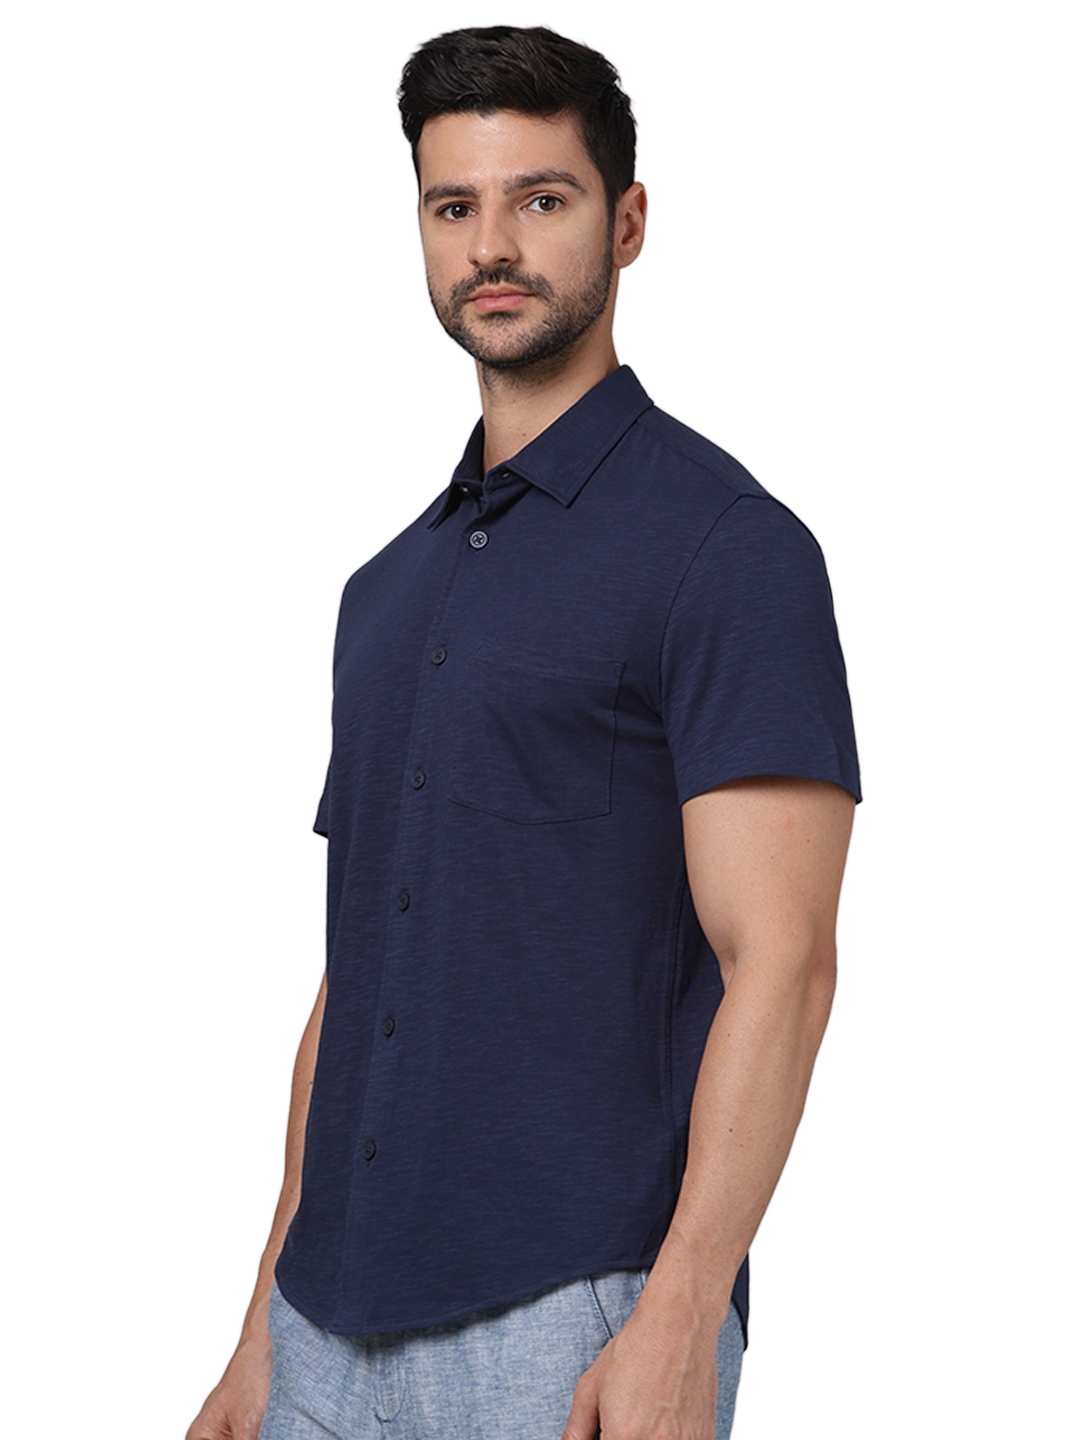 Celio Men Navy Blue Solid Regular Fit Cotton Knit Casual Shirt